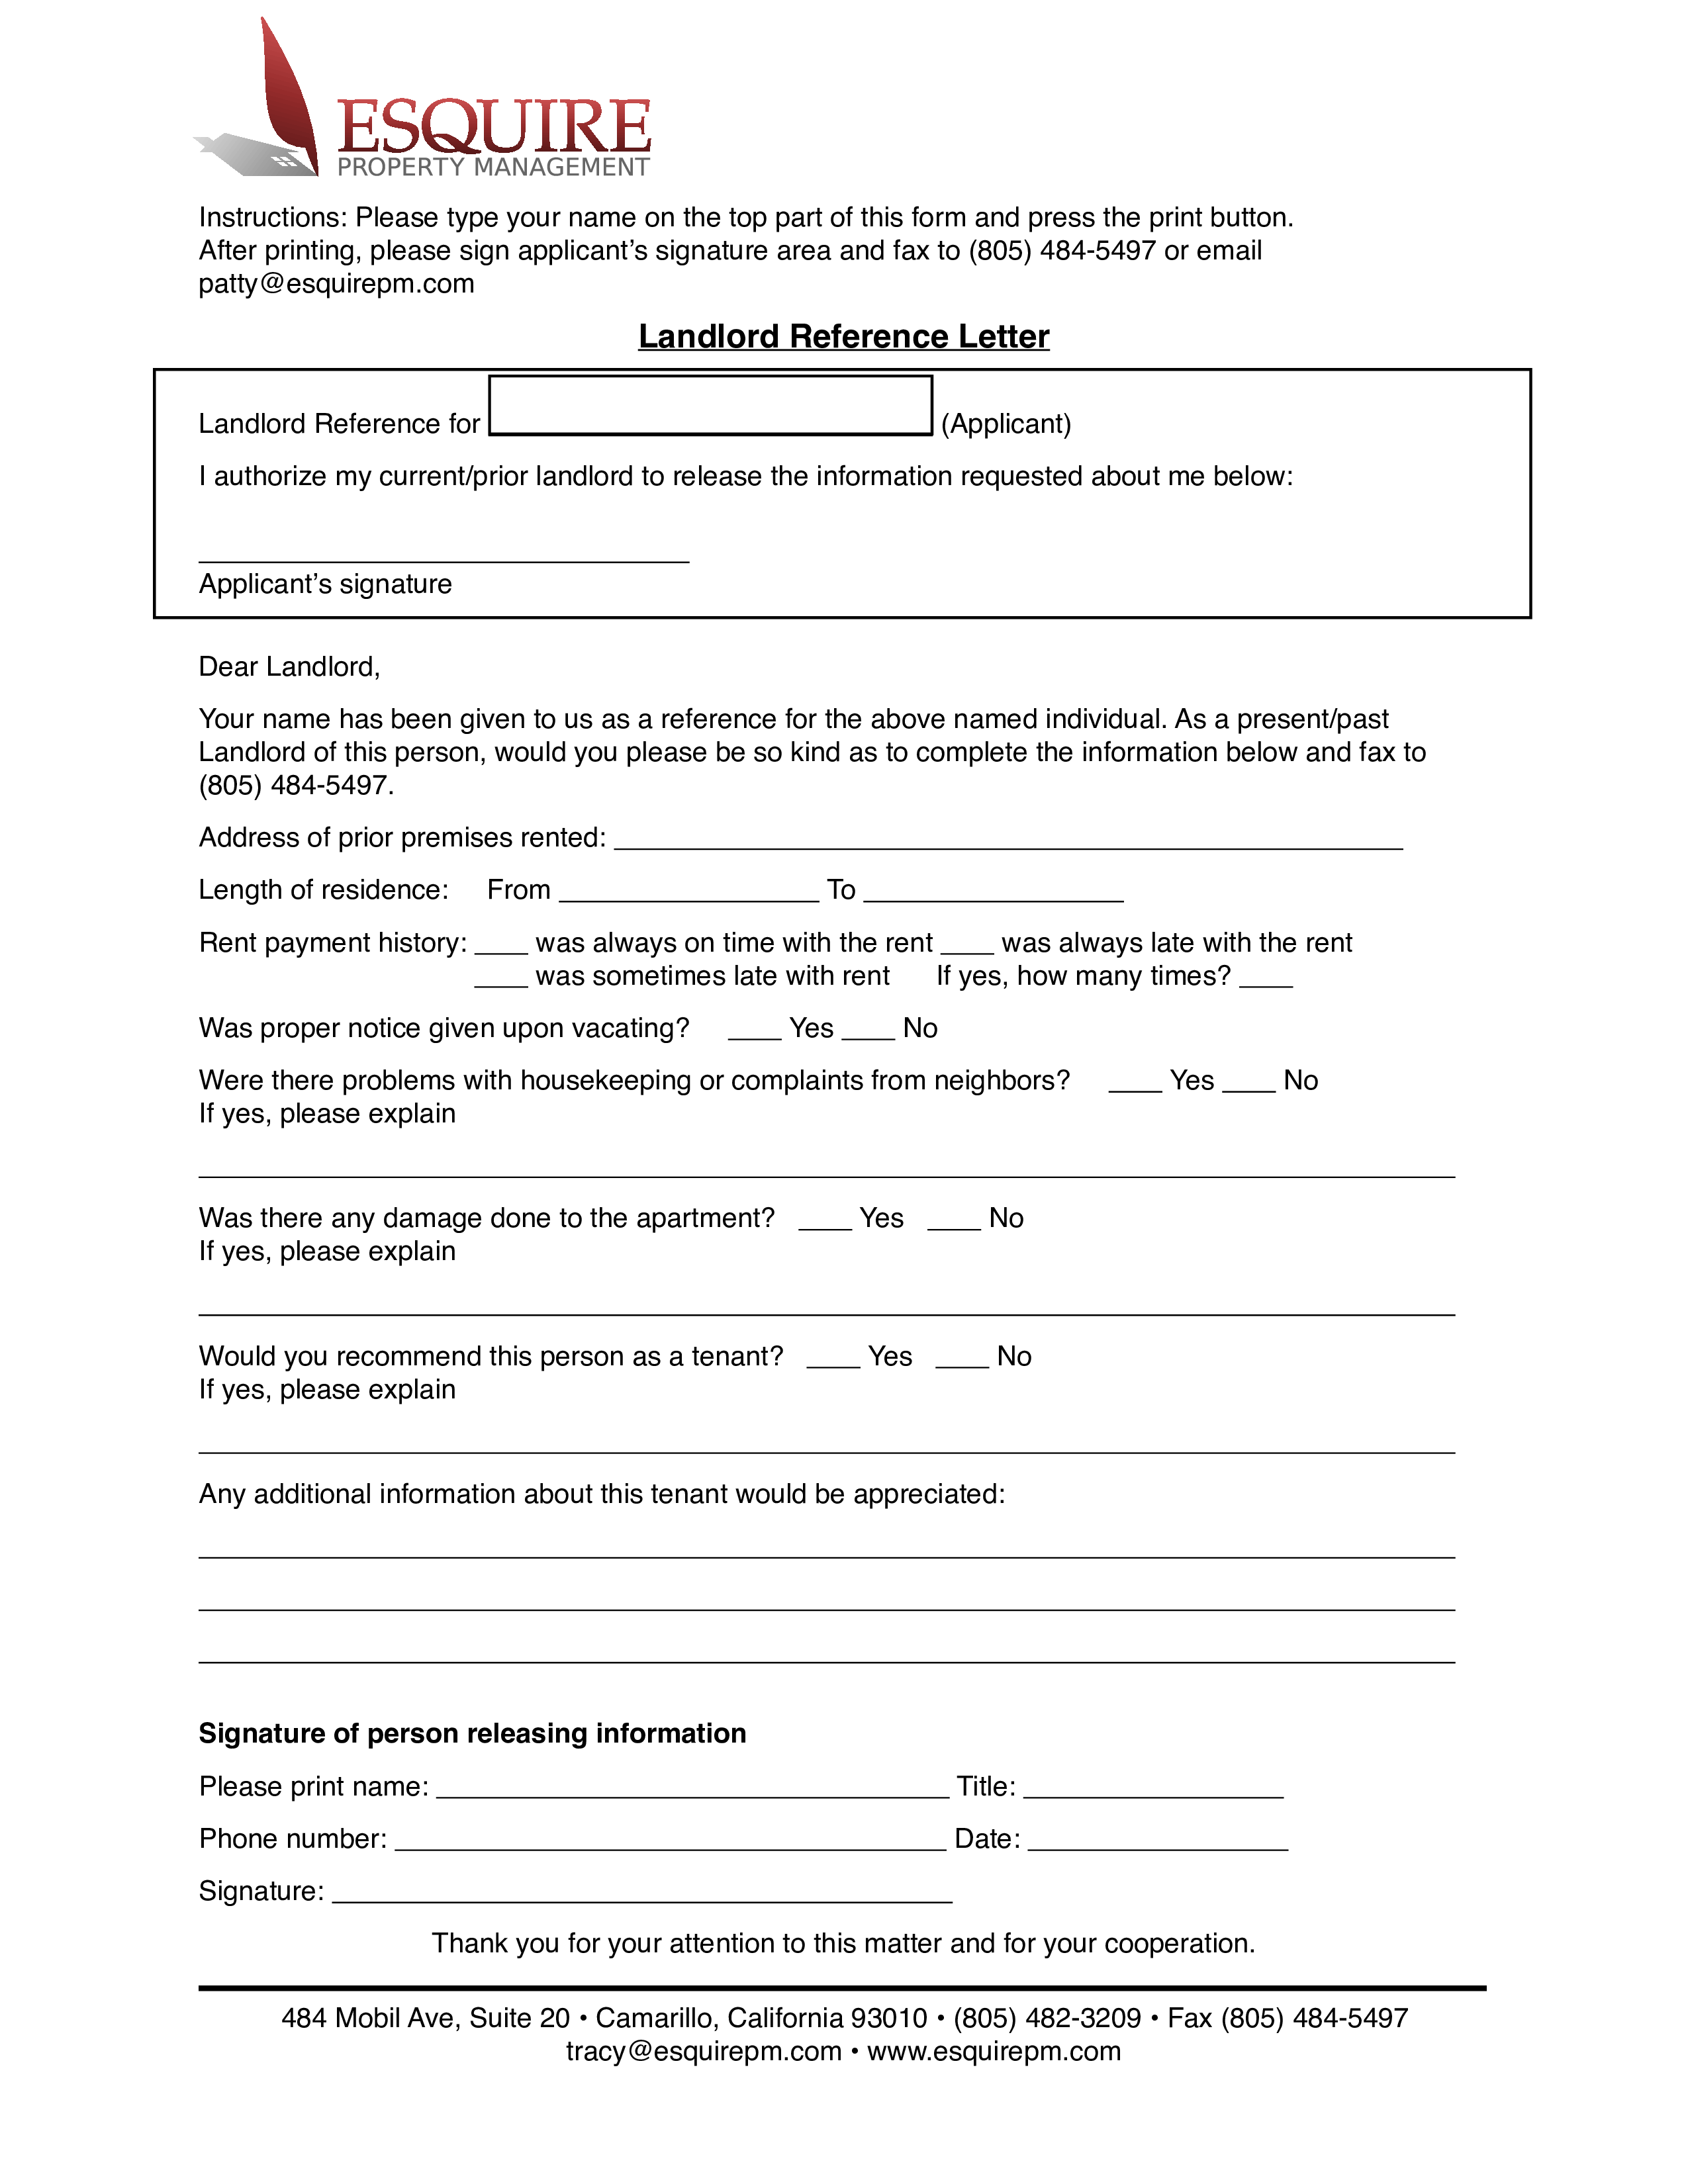 Landlord Letter Of Reference Sample 模板